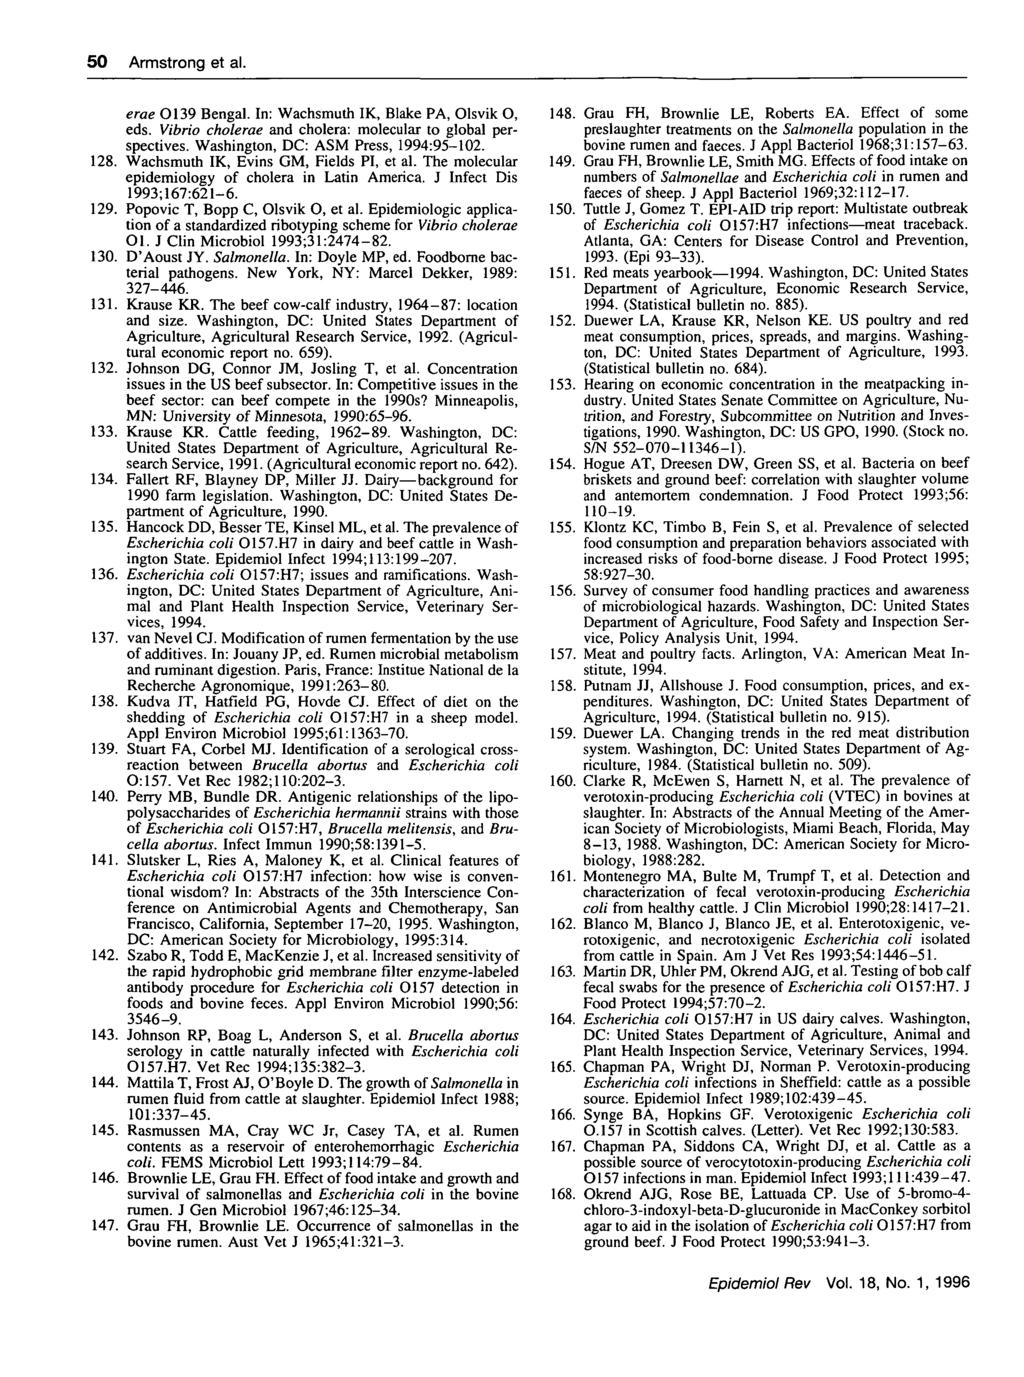 50 Armstrong et al. erae O139 Bengal. In: Wachsmuth IK, Blake PA, Olsvik O, eds. Vibrio cholerae and cholera: molecular to global perspectives. Washington, DC: ASM Press, 1994:95-102. 128.